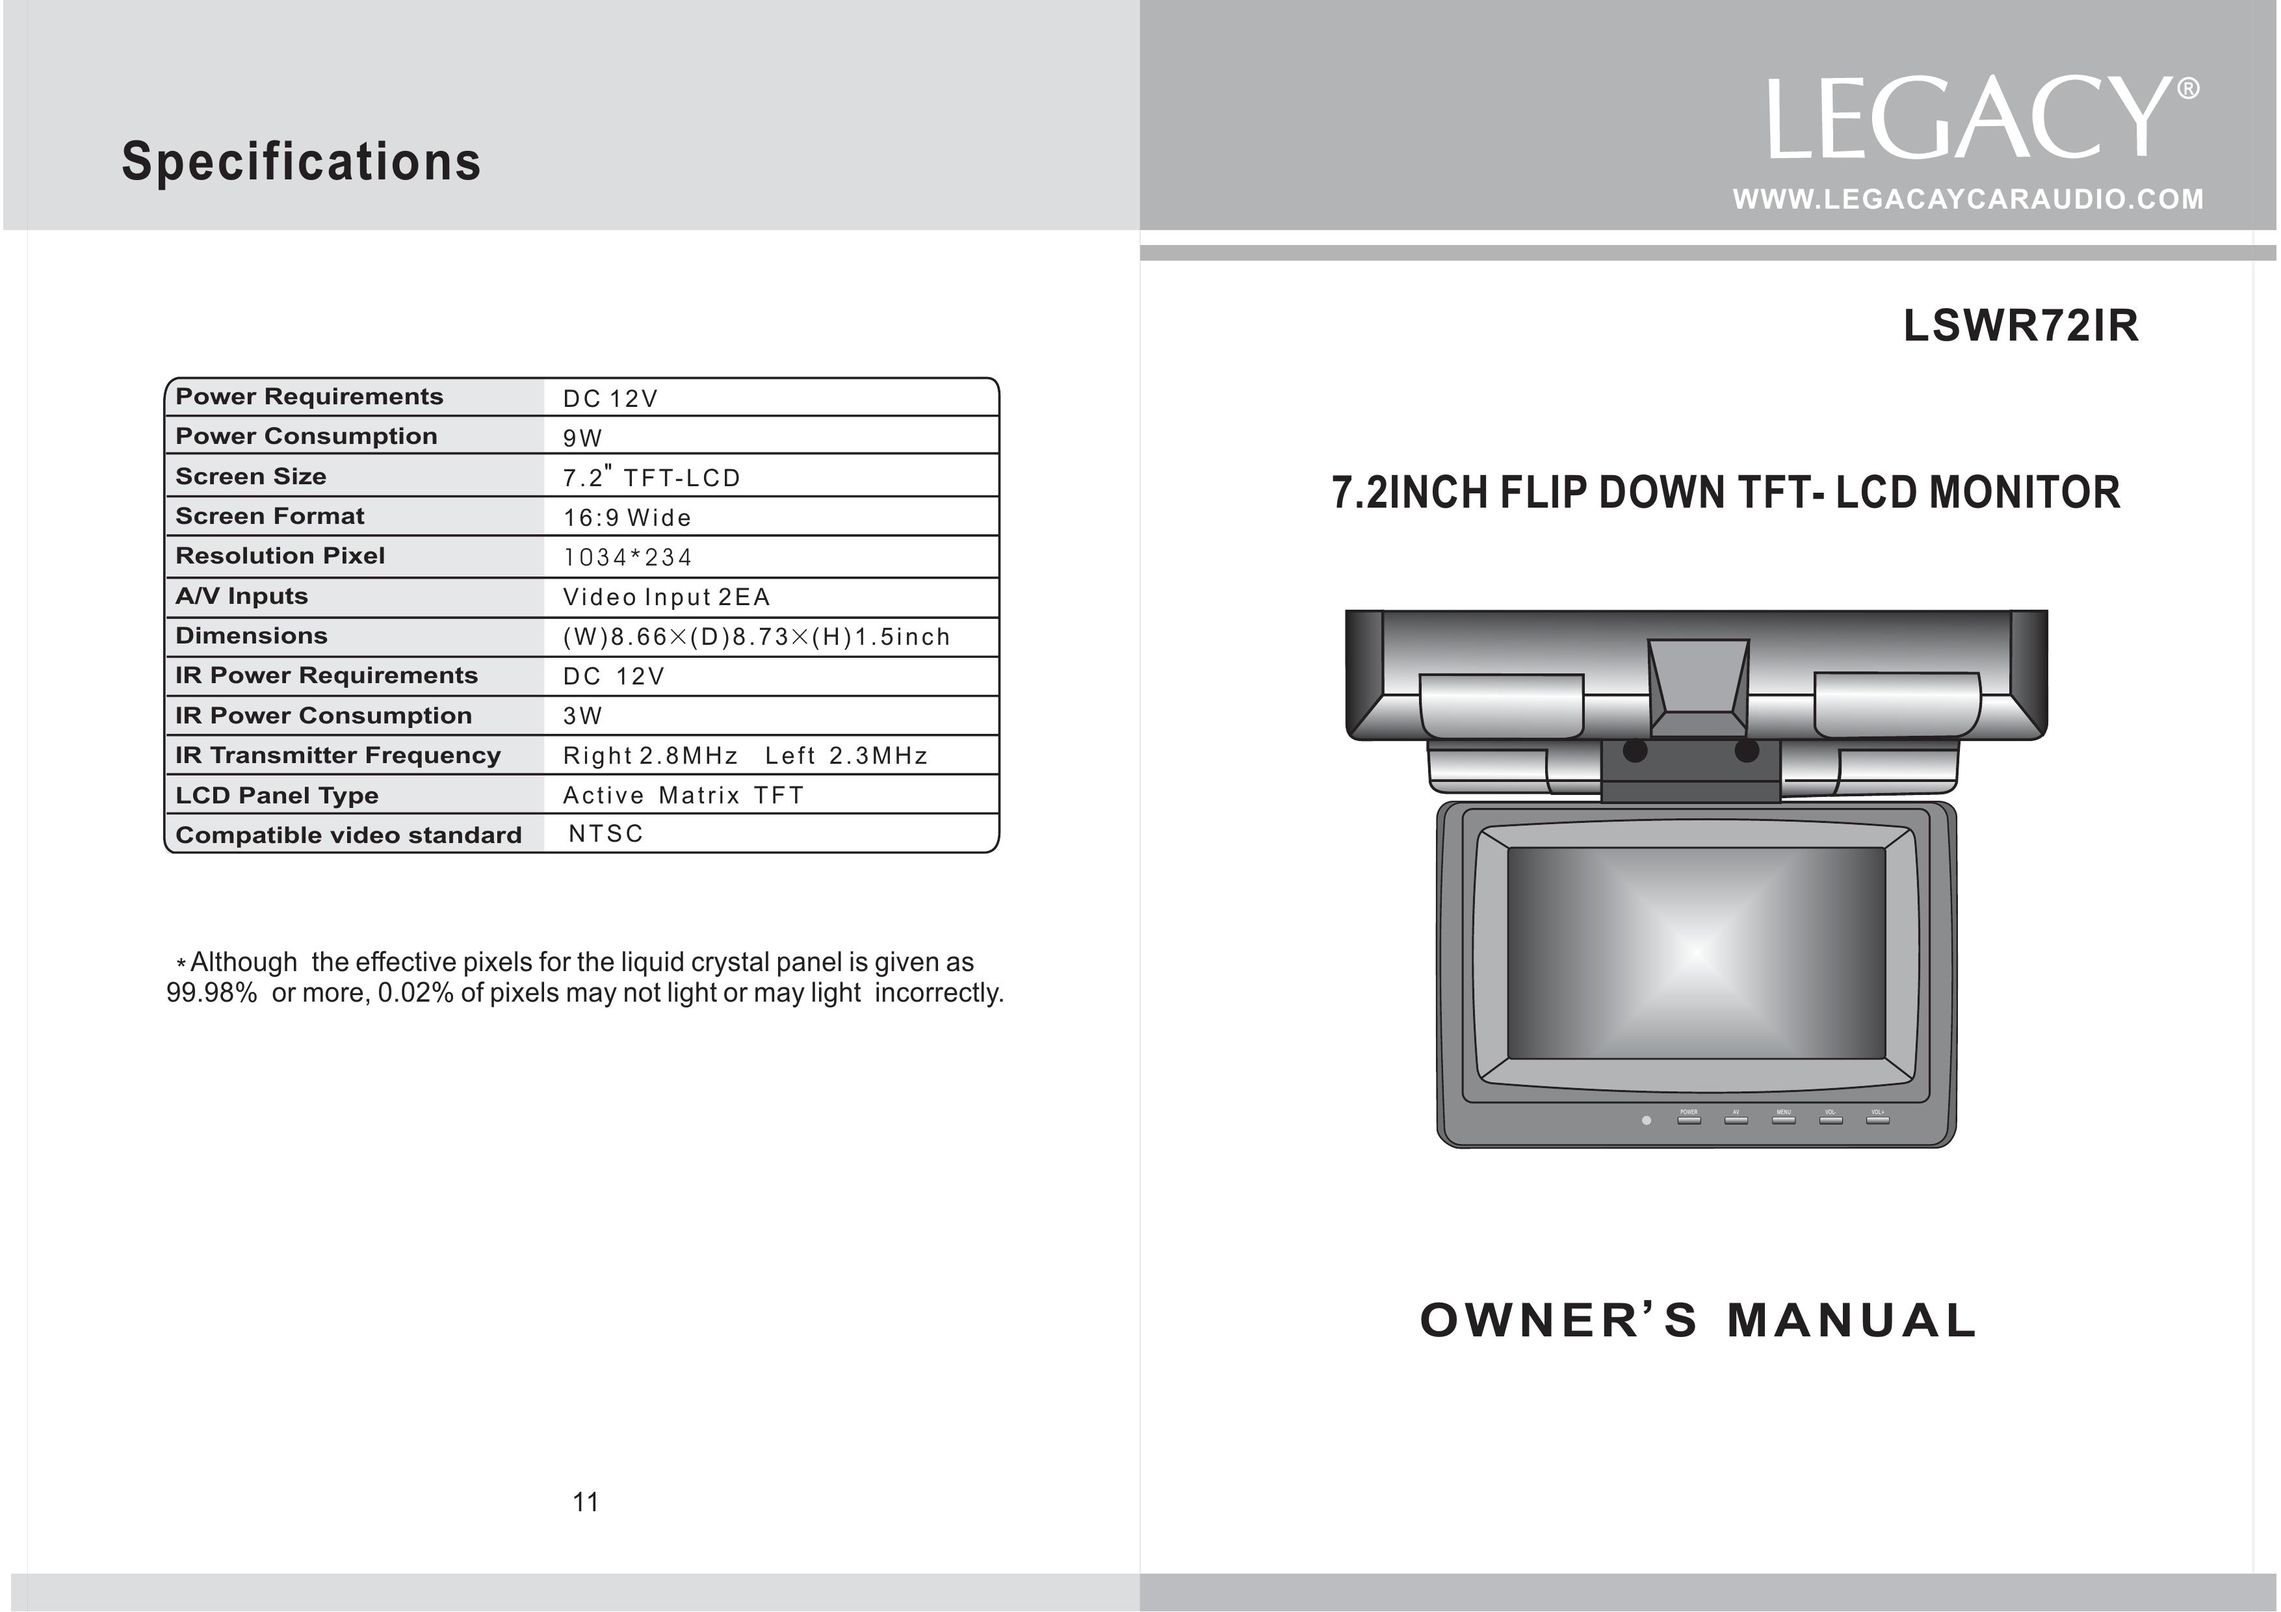 Legacy Car Audio LSWR72IR Car Video System User Manual